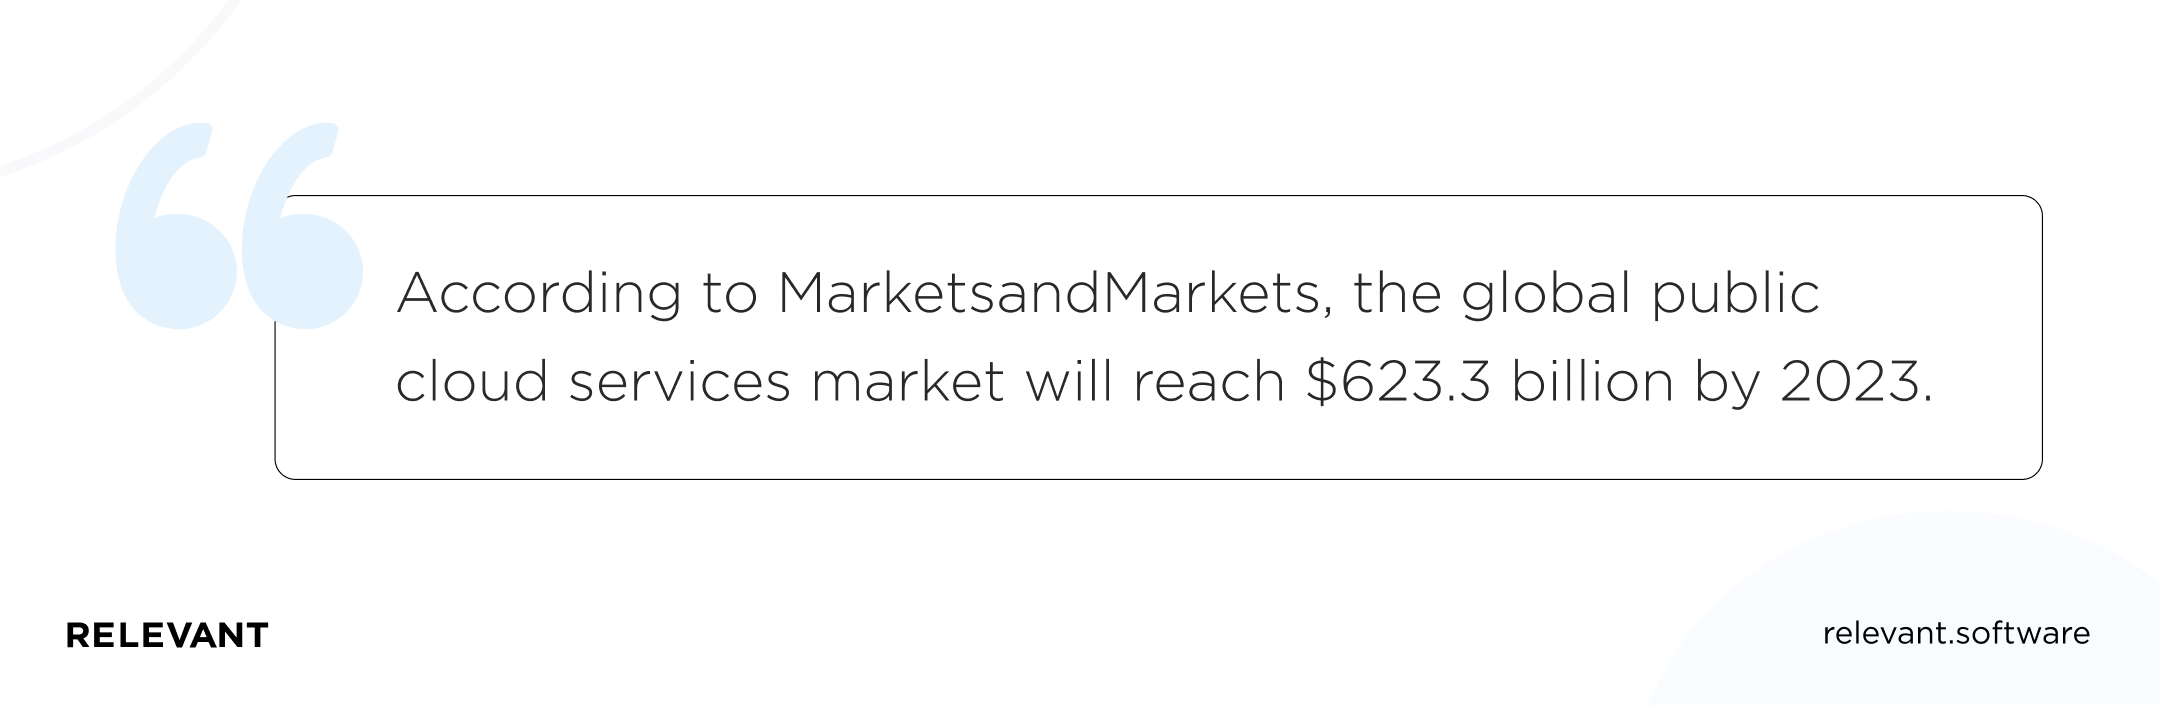 According to MarketsandMarkets, the global public cloud services market will reach 3.3 billion by 2023.